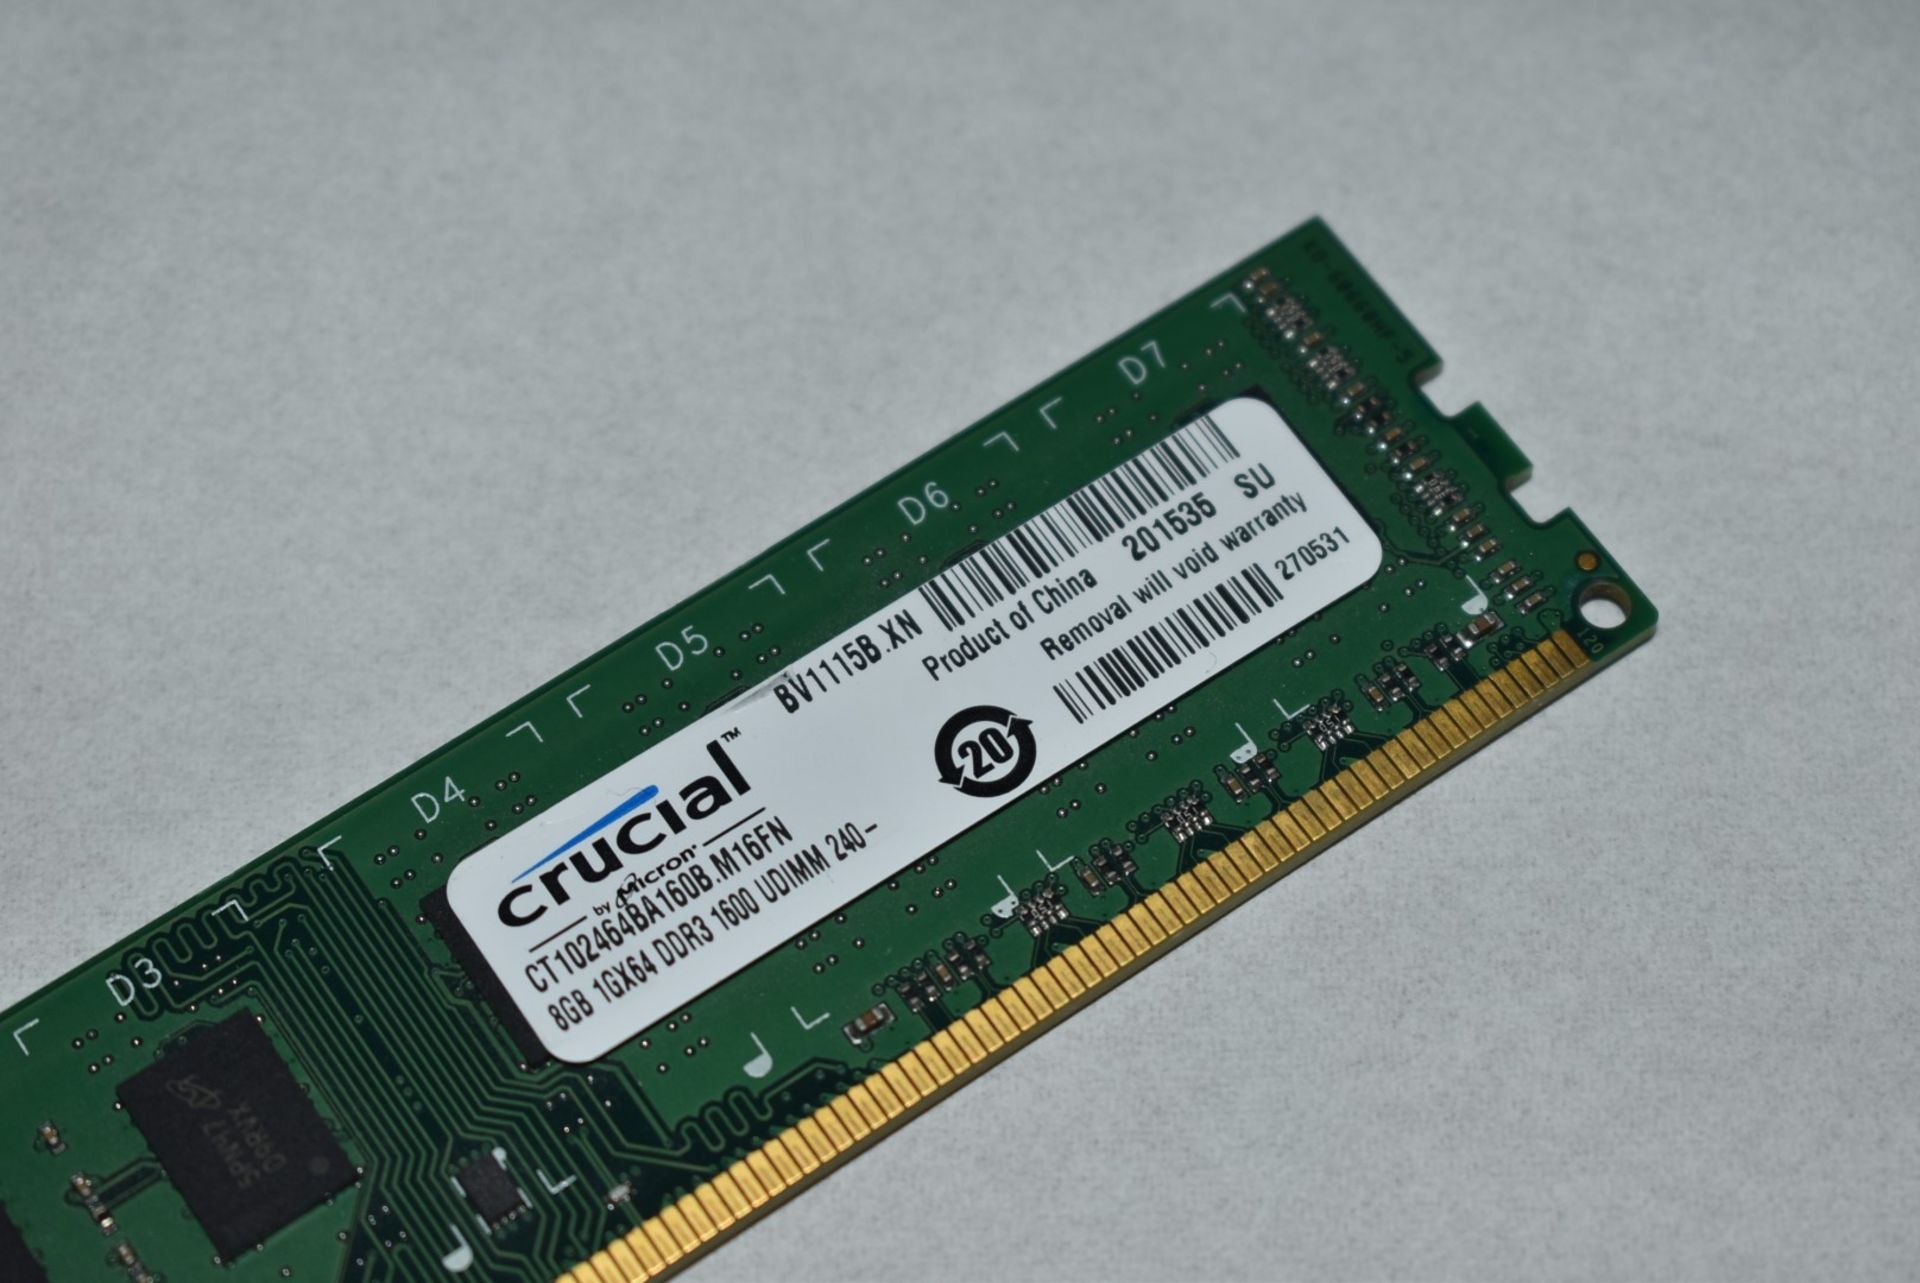 1 x Crucial 8GB DDR3 Ram Module For Desktop Computers - 1 x 8GB Ram Module - 1600 MHz - Ref: - Image 2 of 2